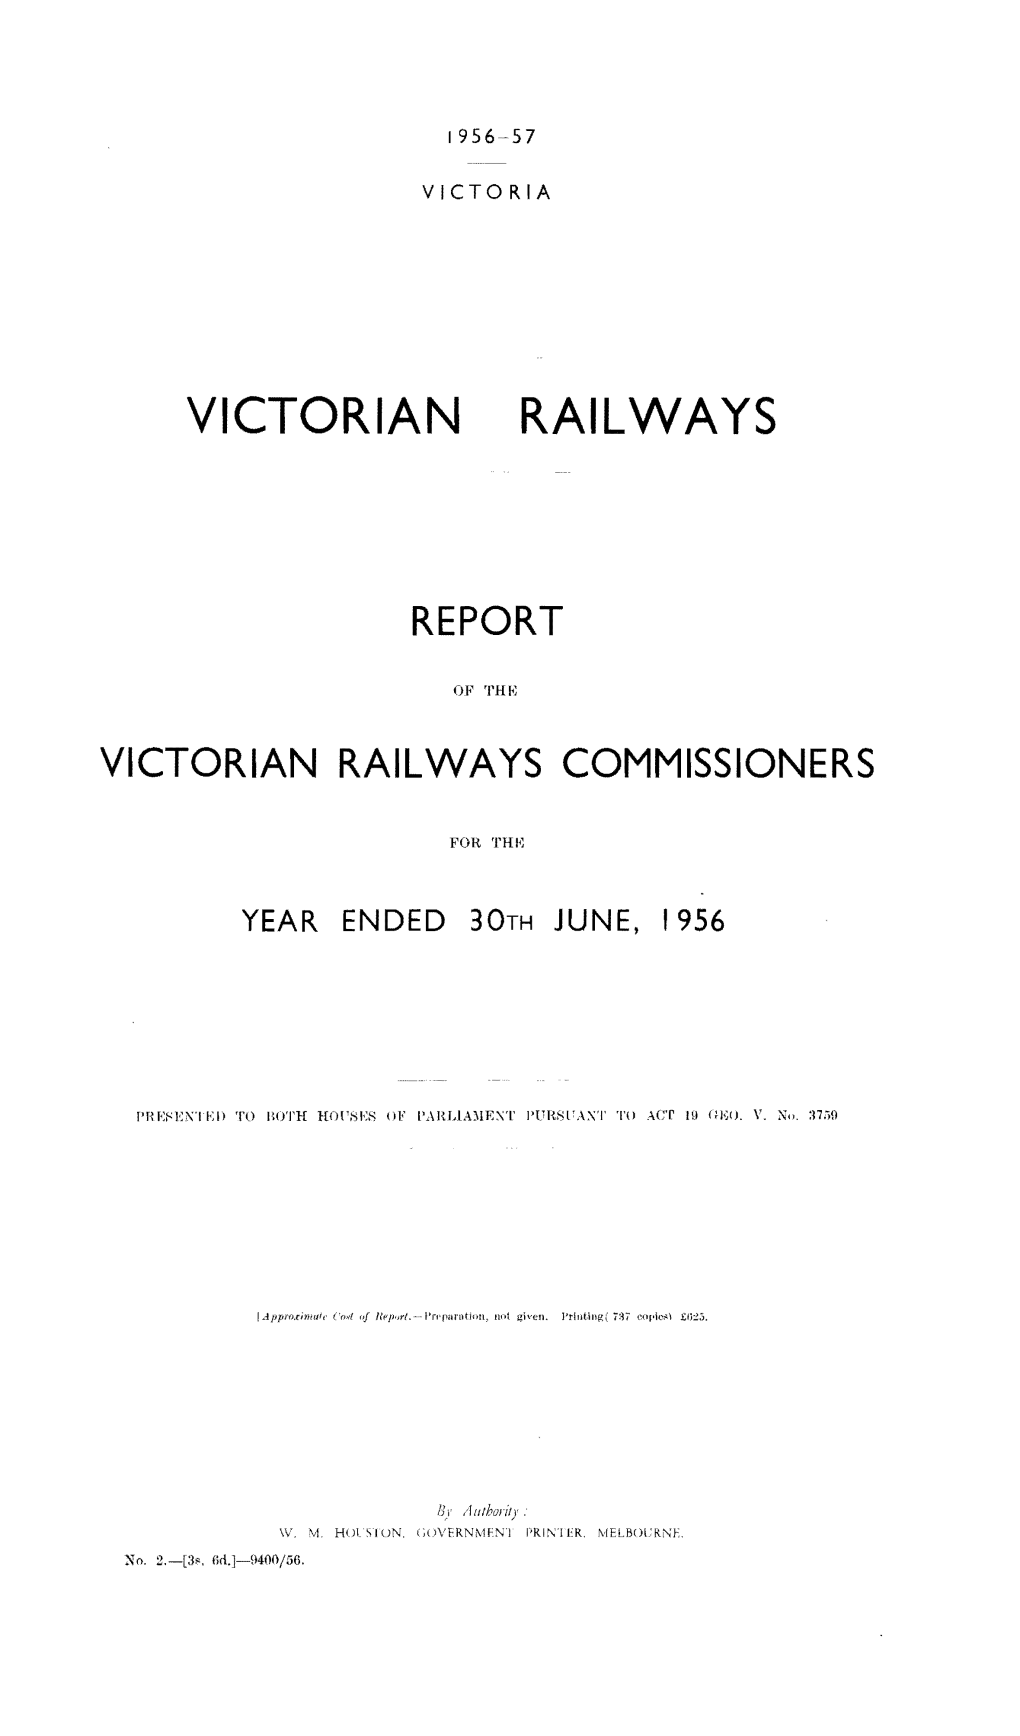 Victorian Railways